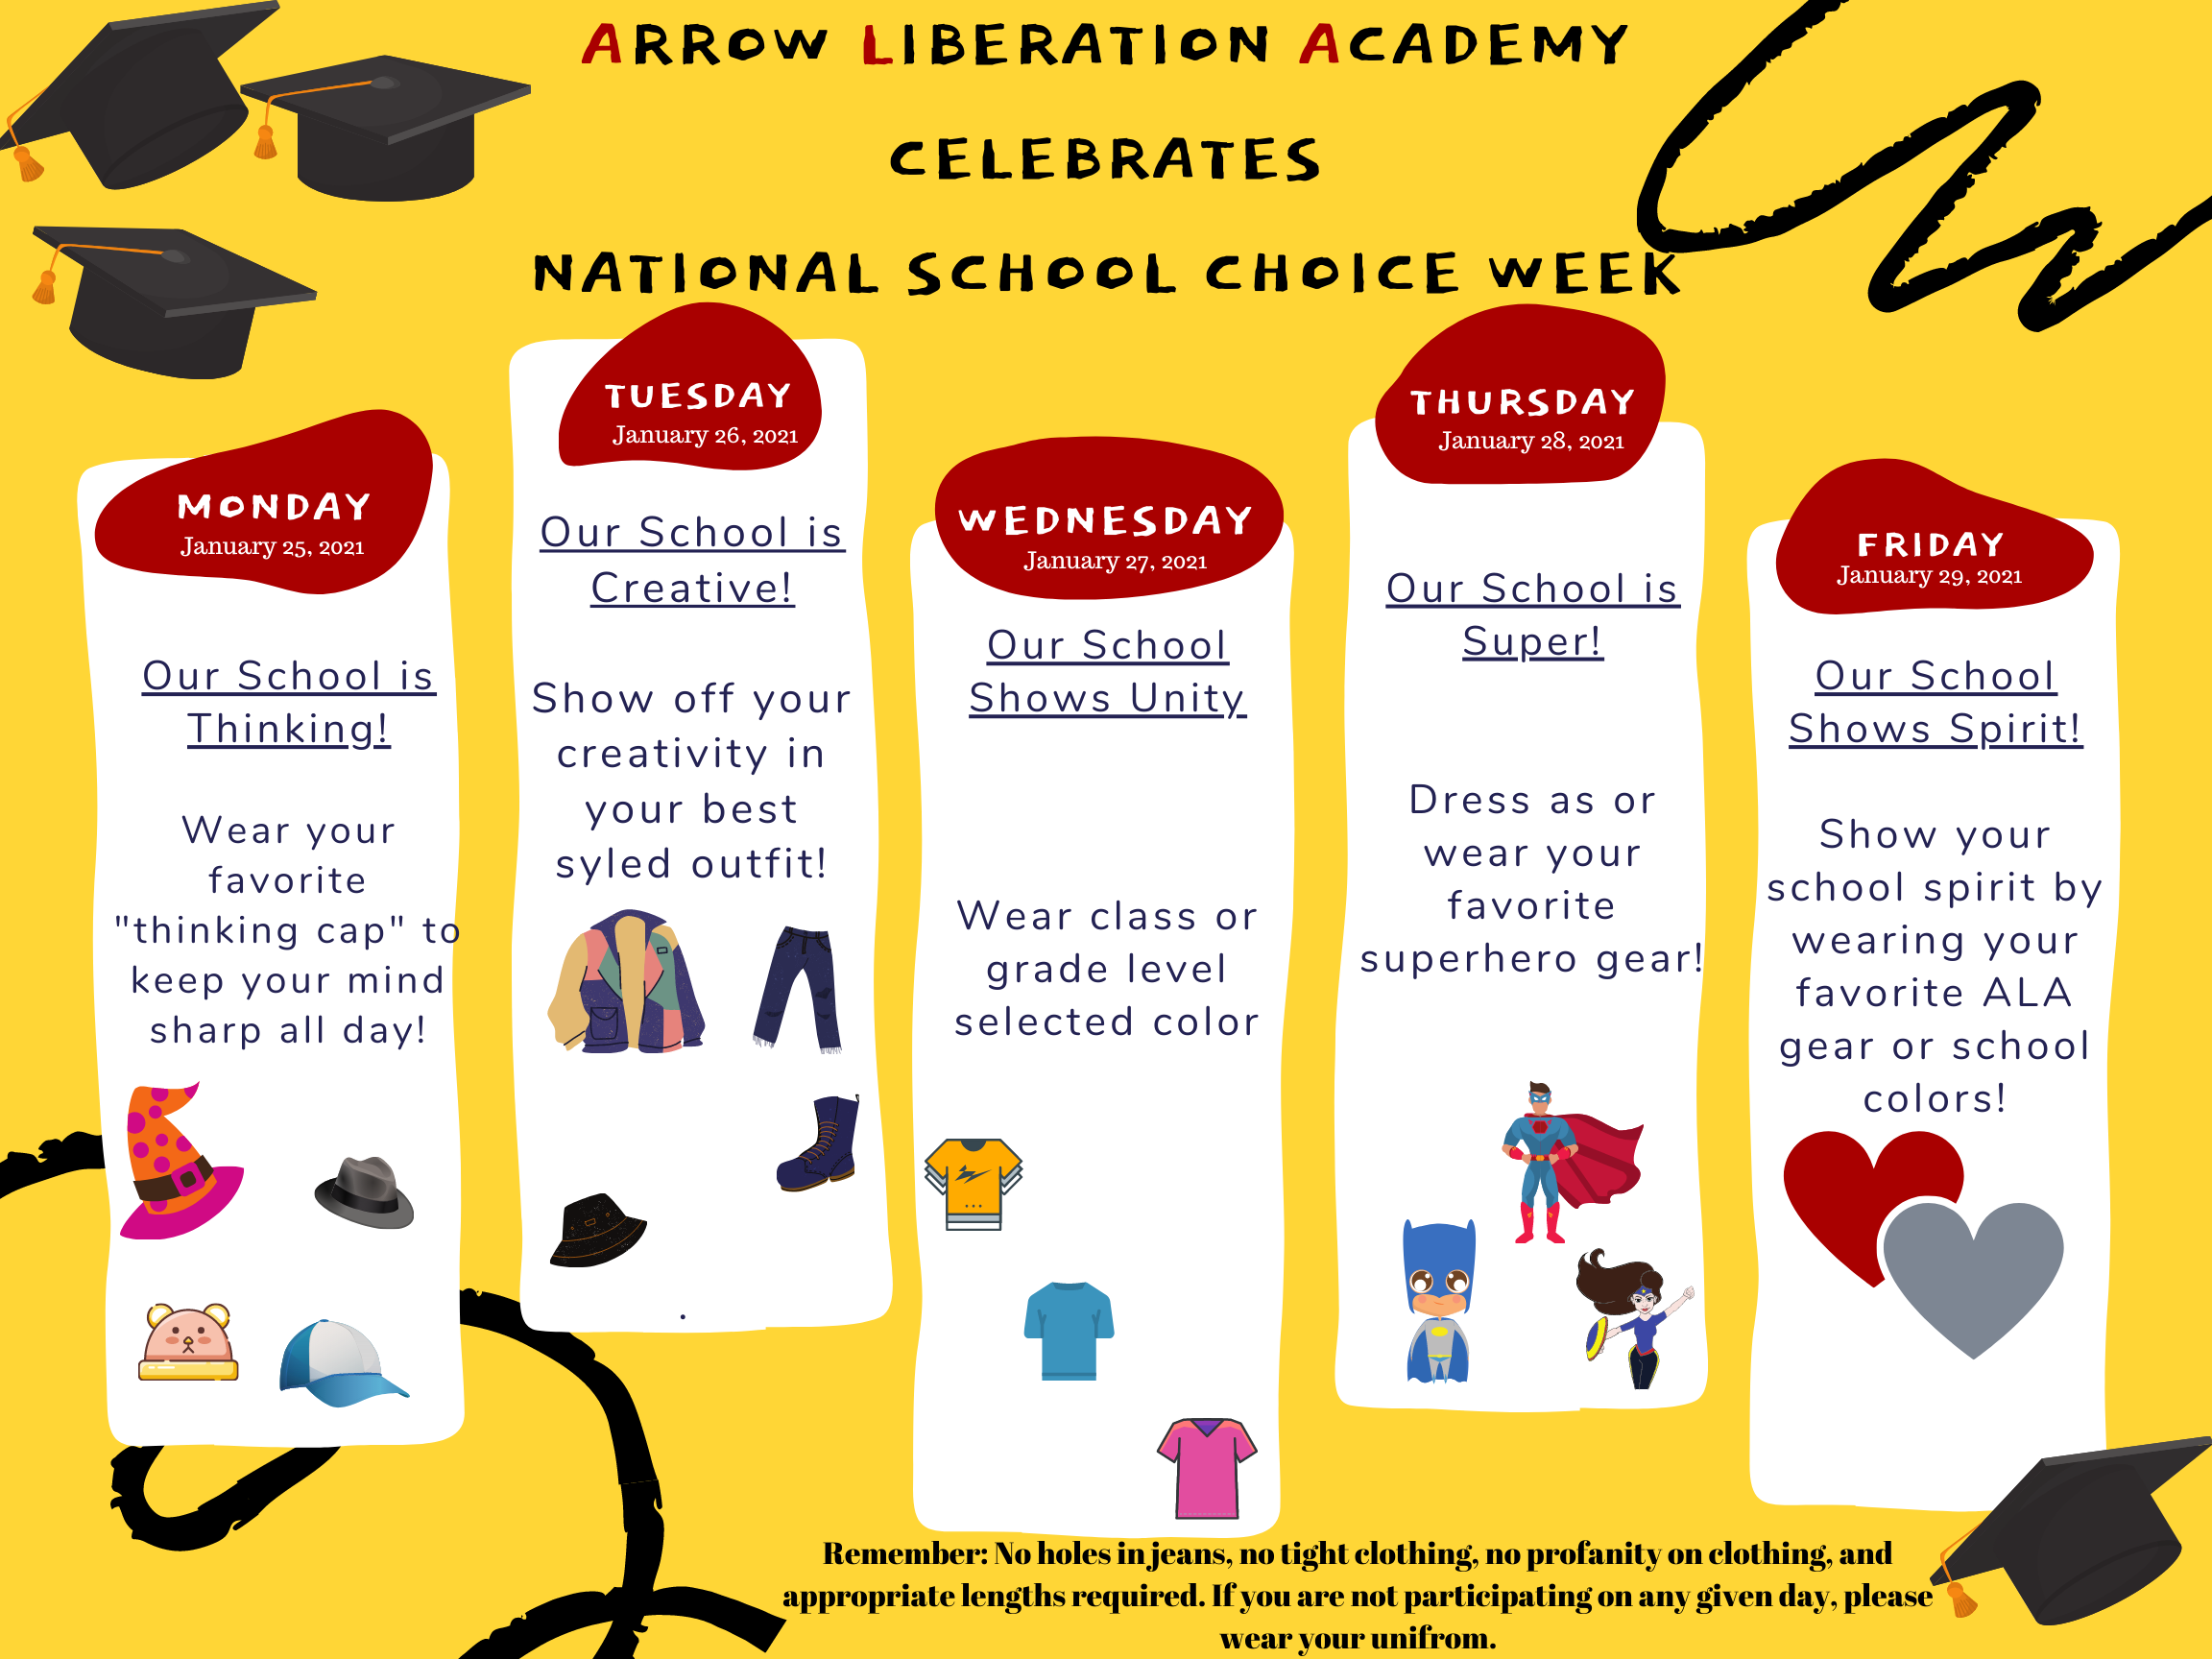 NATIONAL SCHOOL CHOICE WEEK Themed Dress Days Liberation Academy